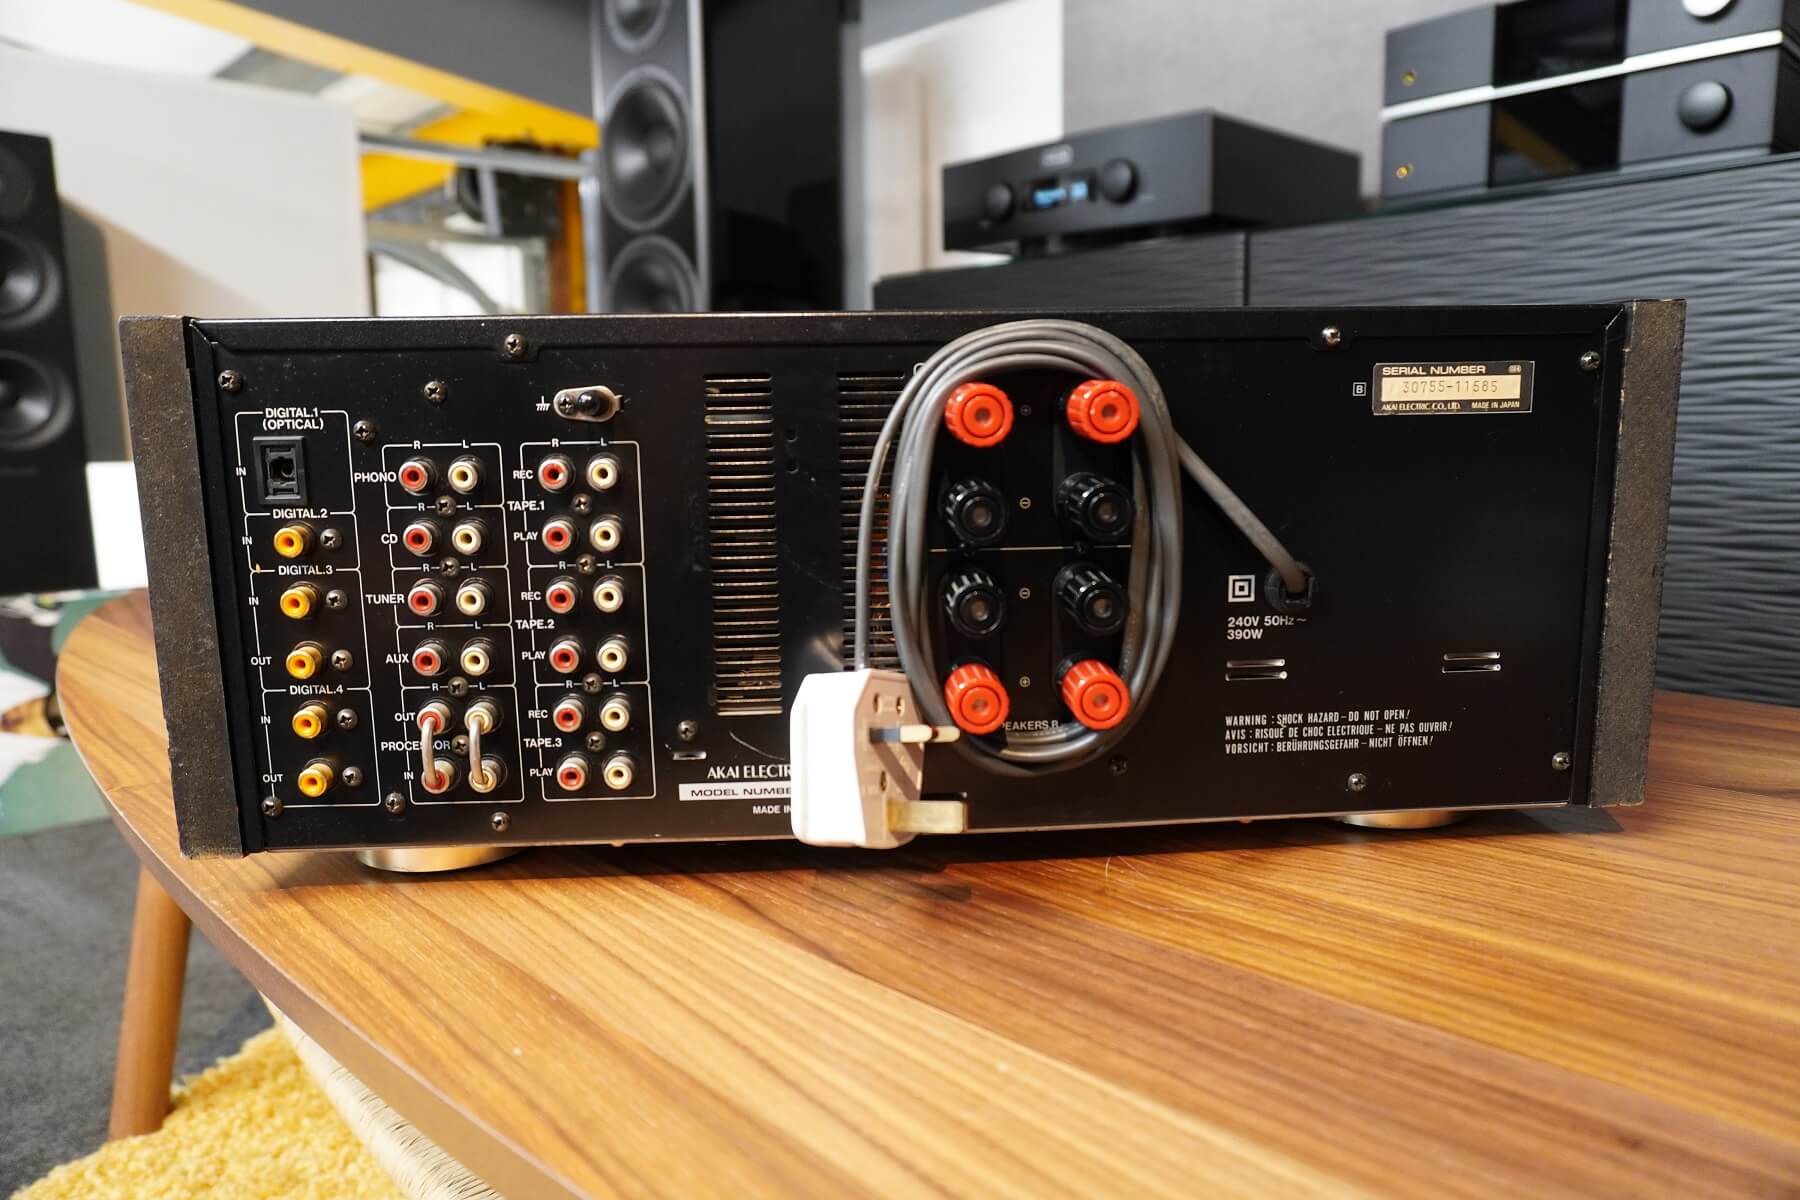 Akai AM-73 Digital Integrated Amplifier - Rear